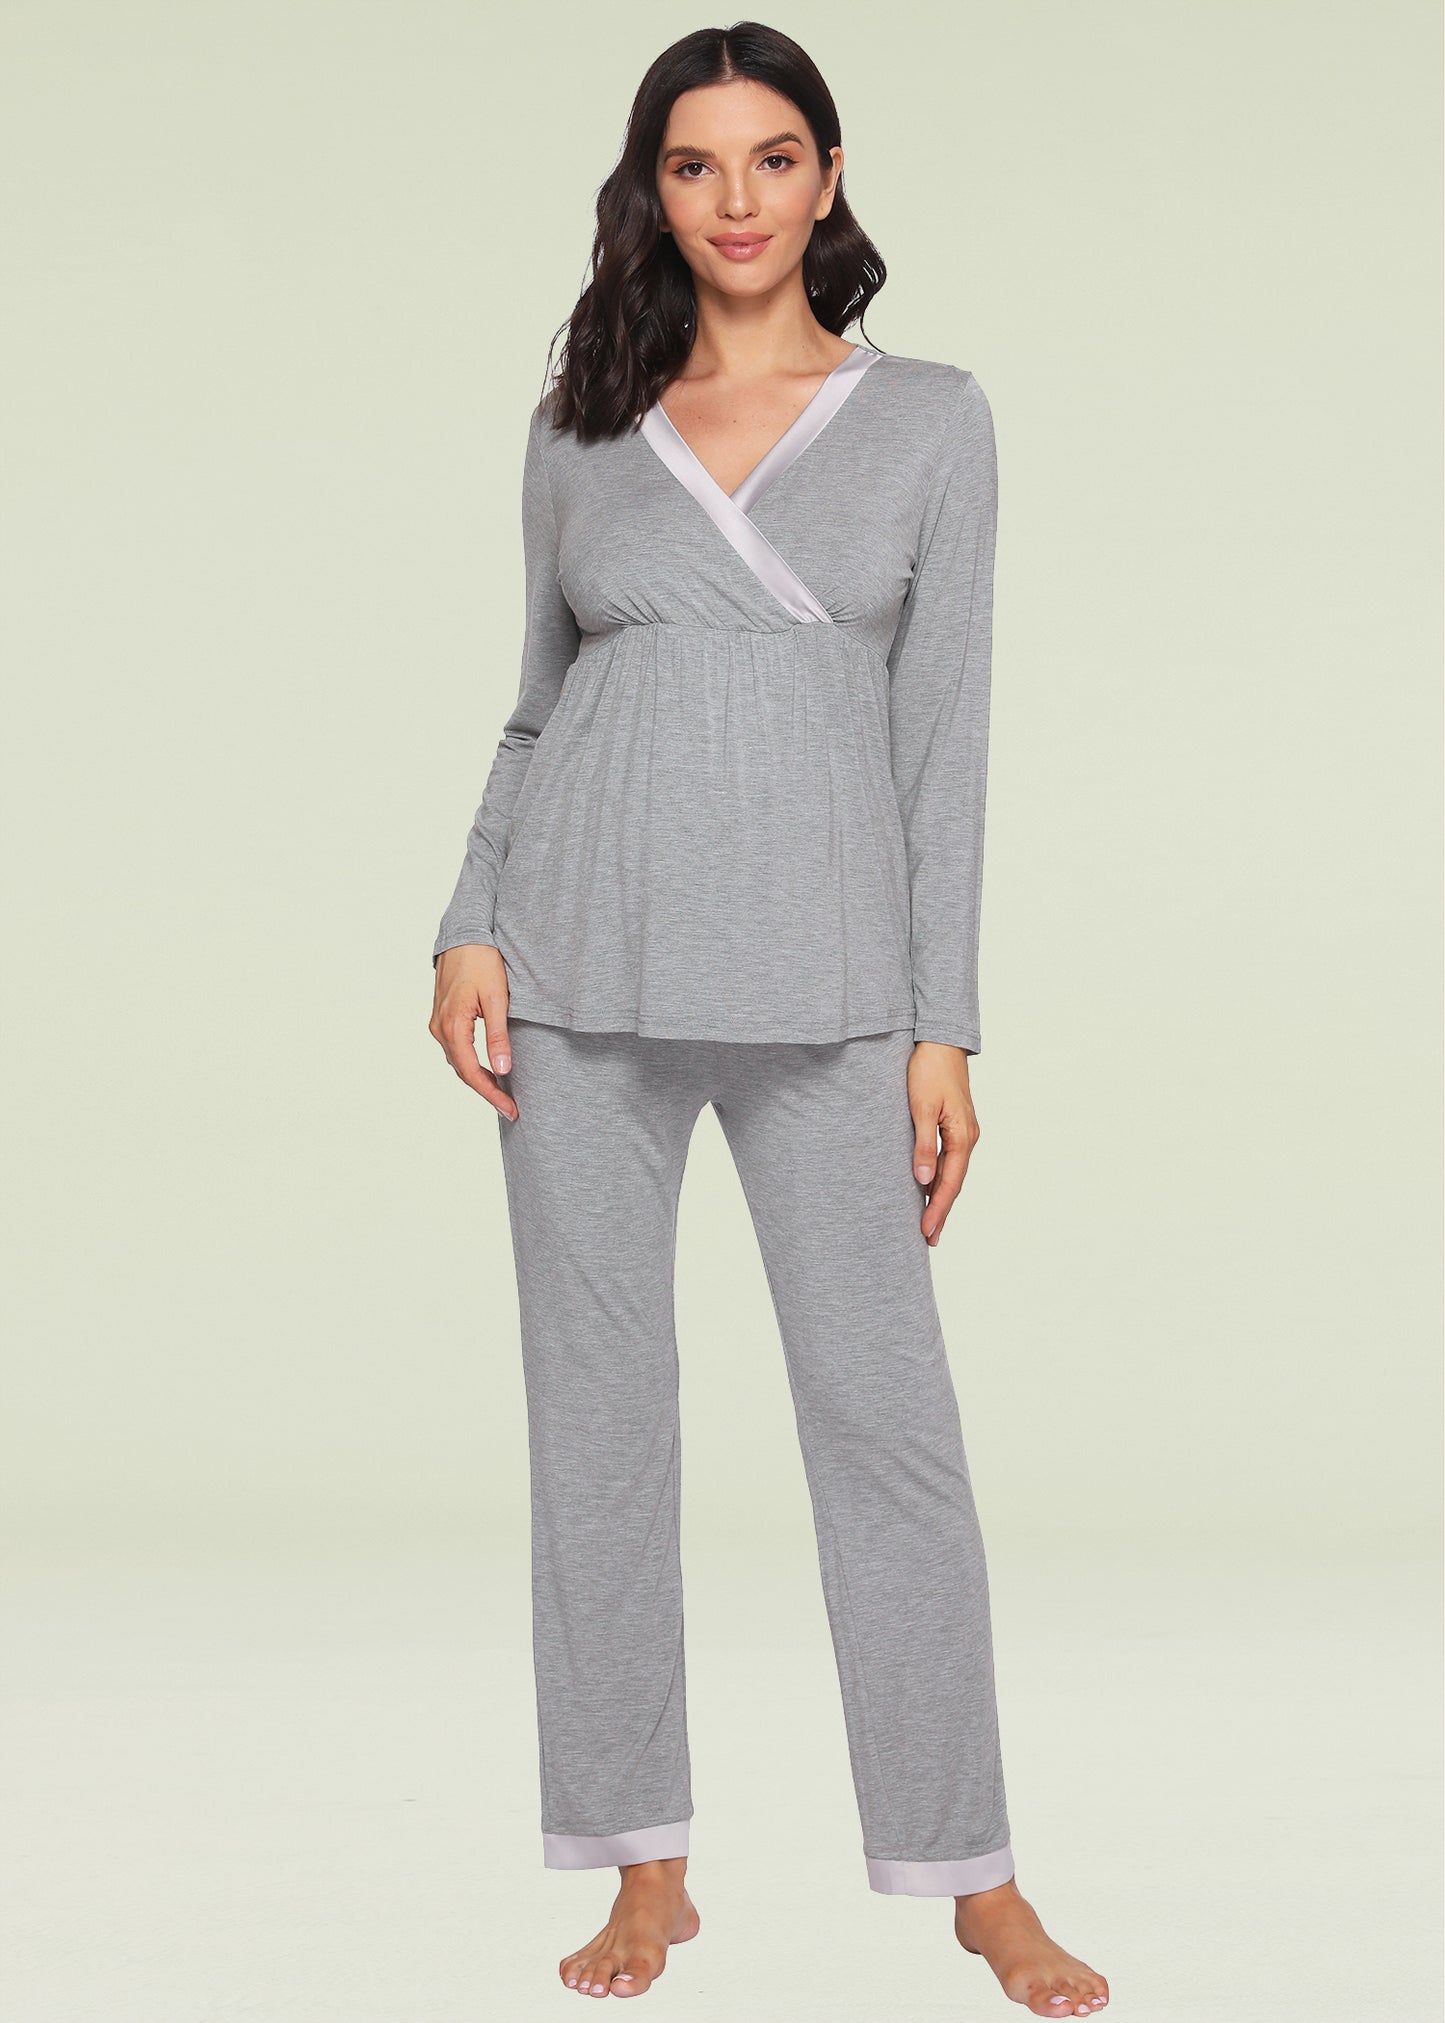 Women's Maternity Pajama Pants Set Nursing Loungewear